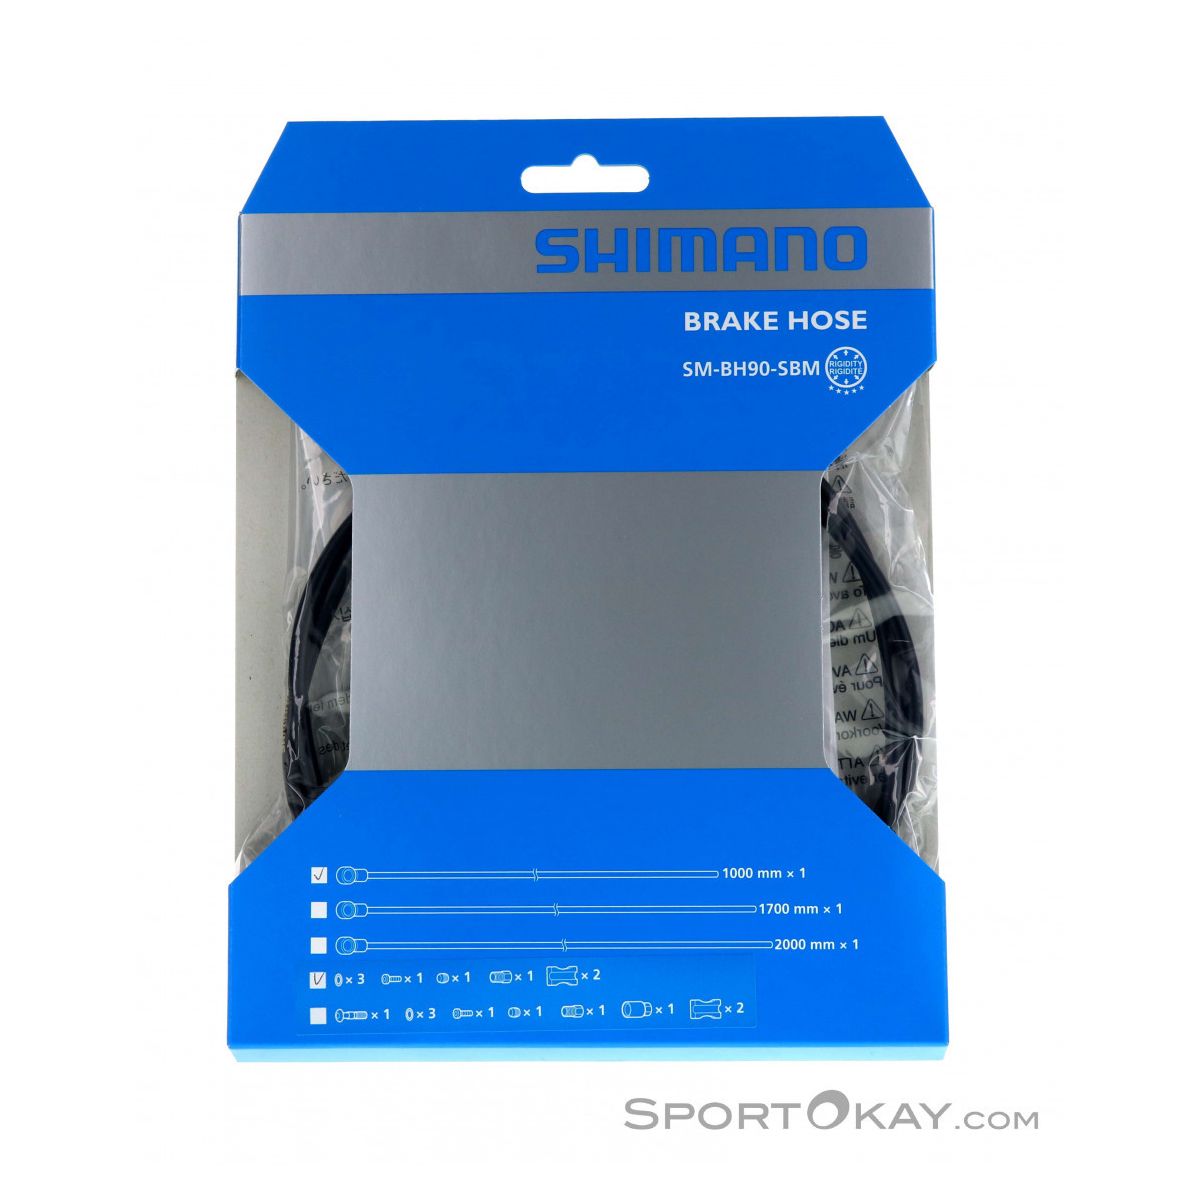 Shimano latiguillo de freno delantero XTR SM-BH90 100cm